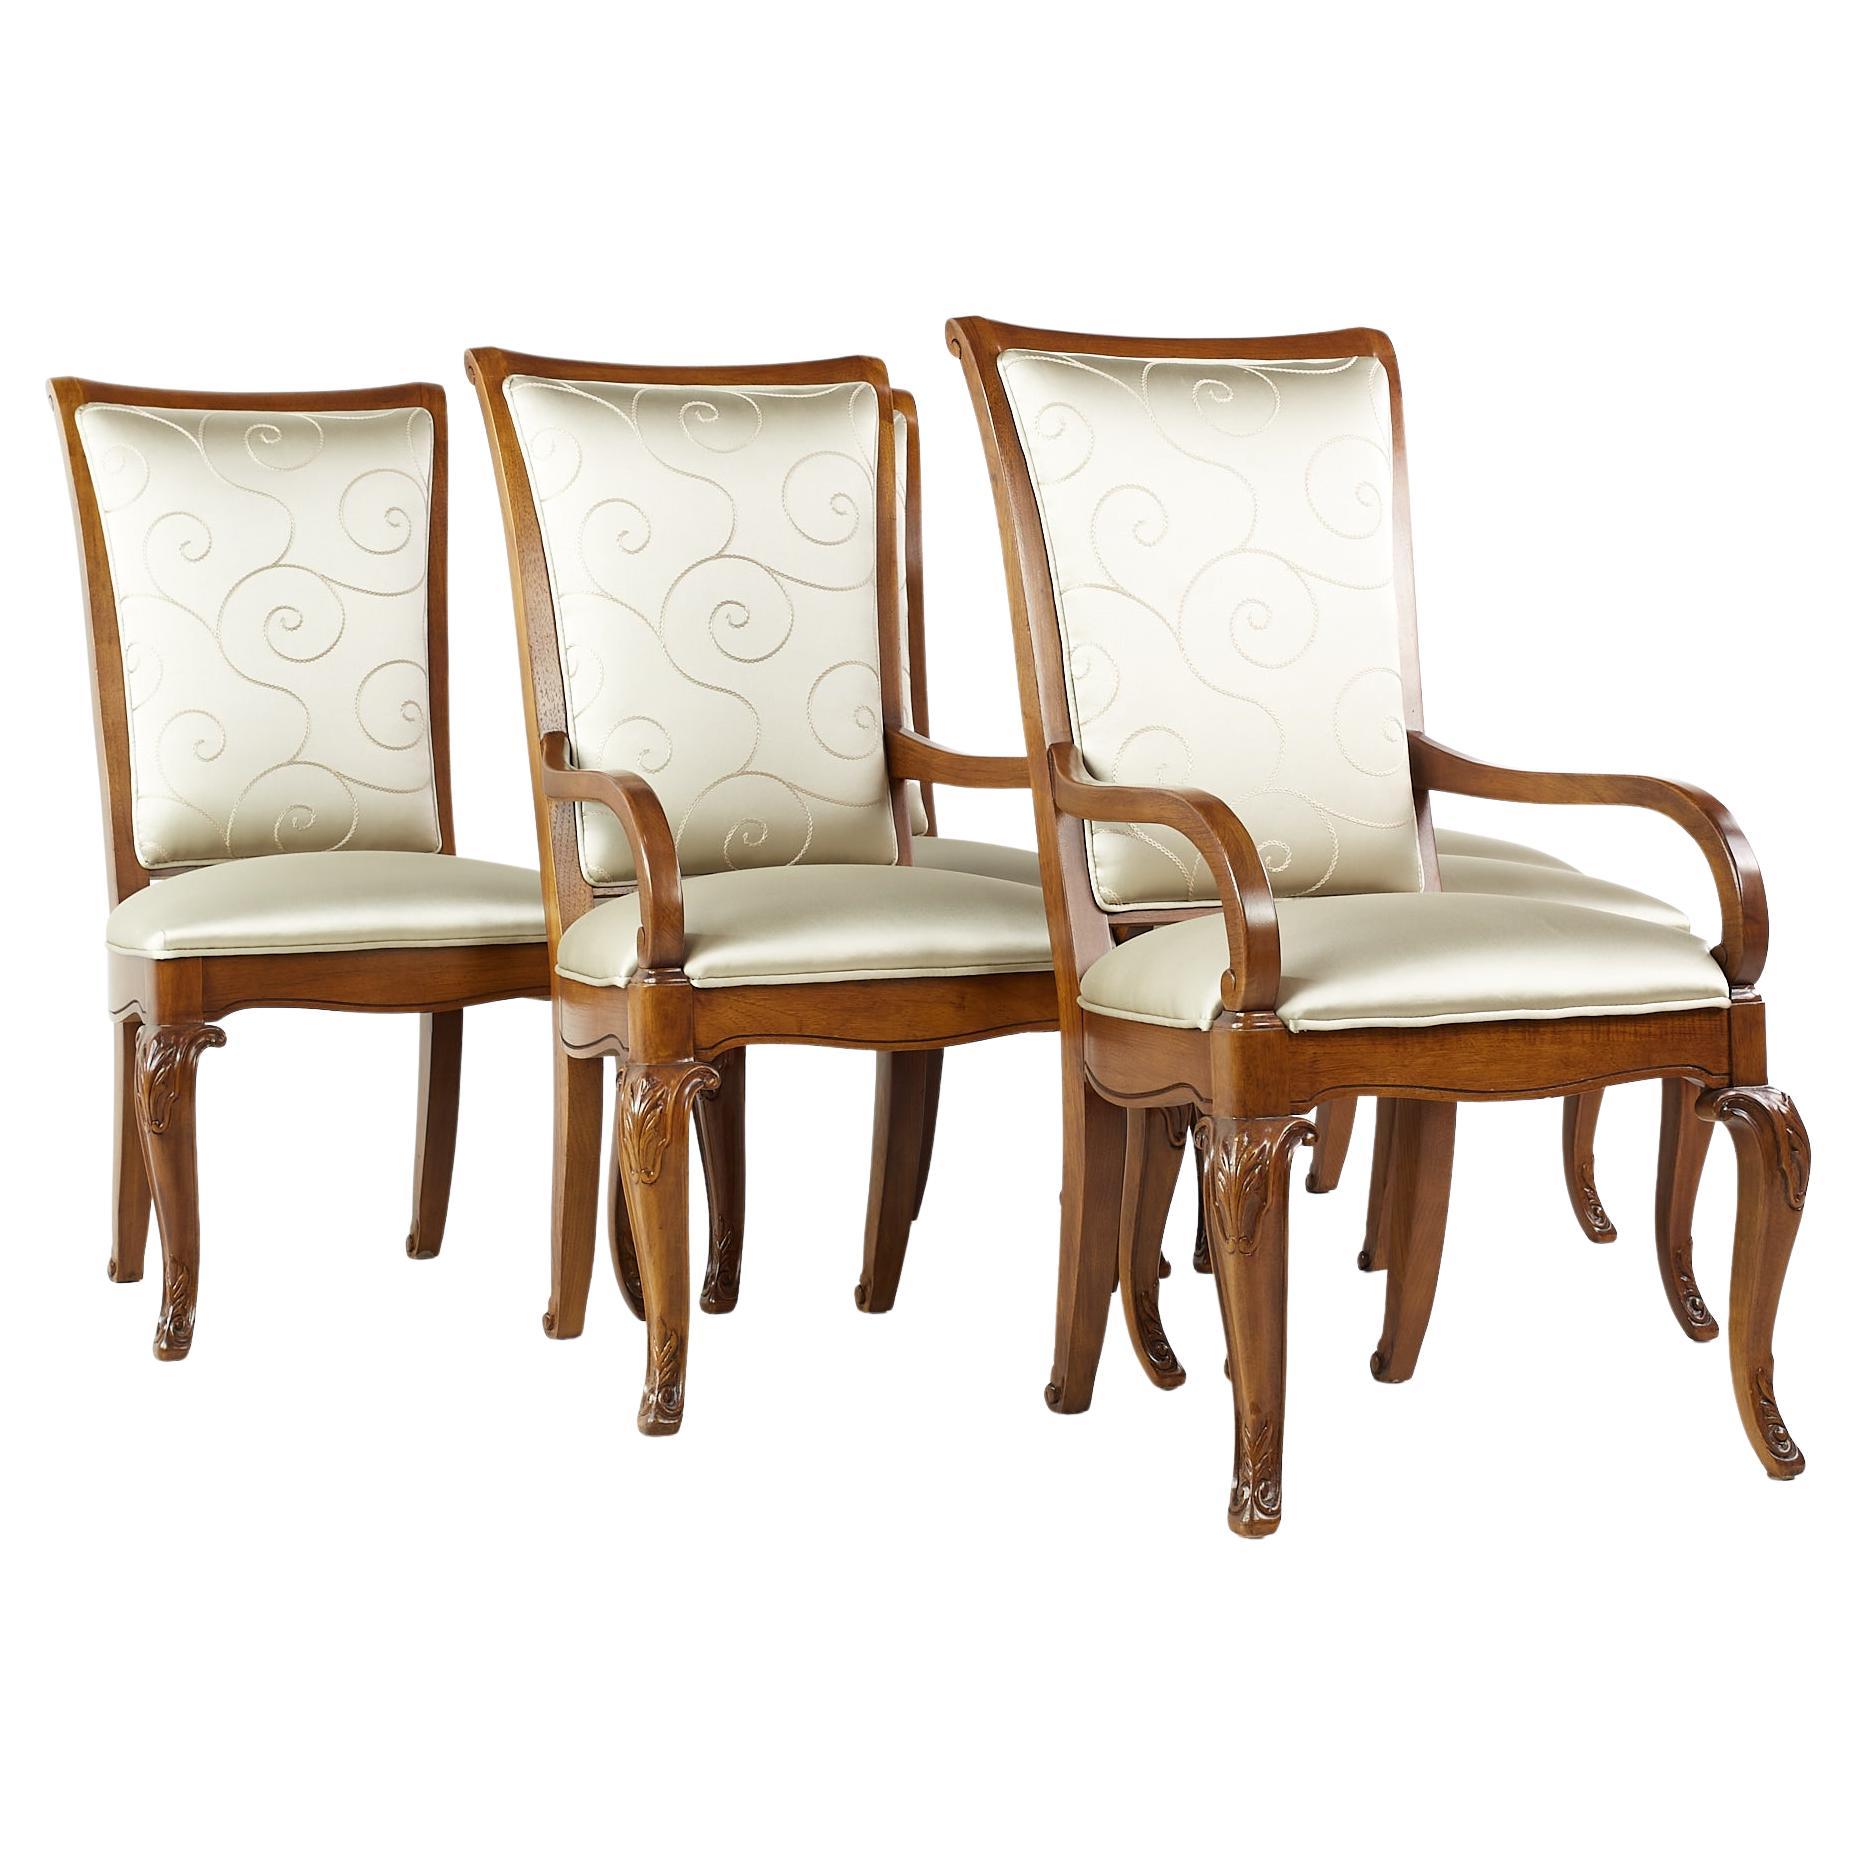 Thomasville Walnut Dining Chairs, Set of 6